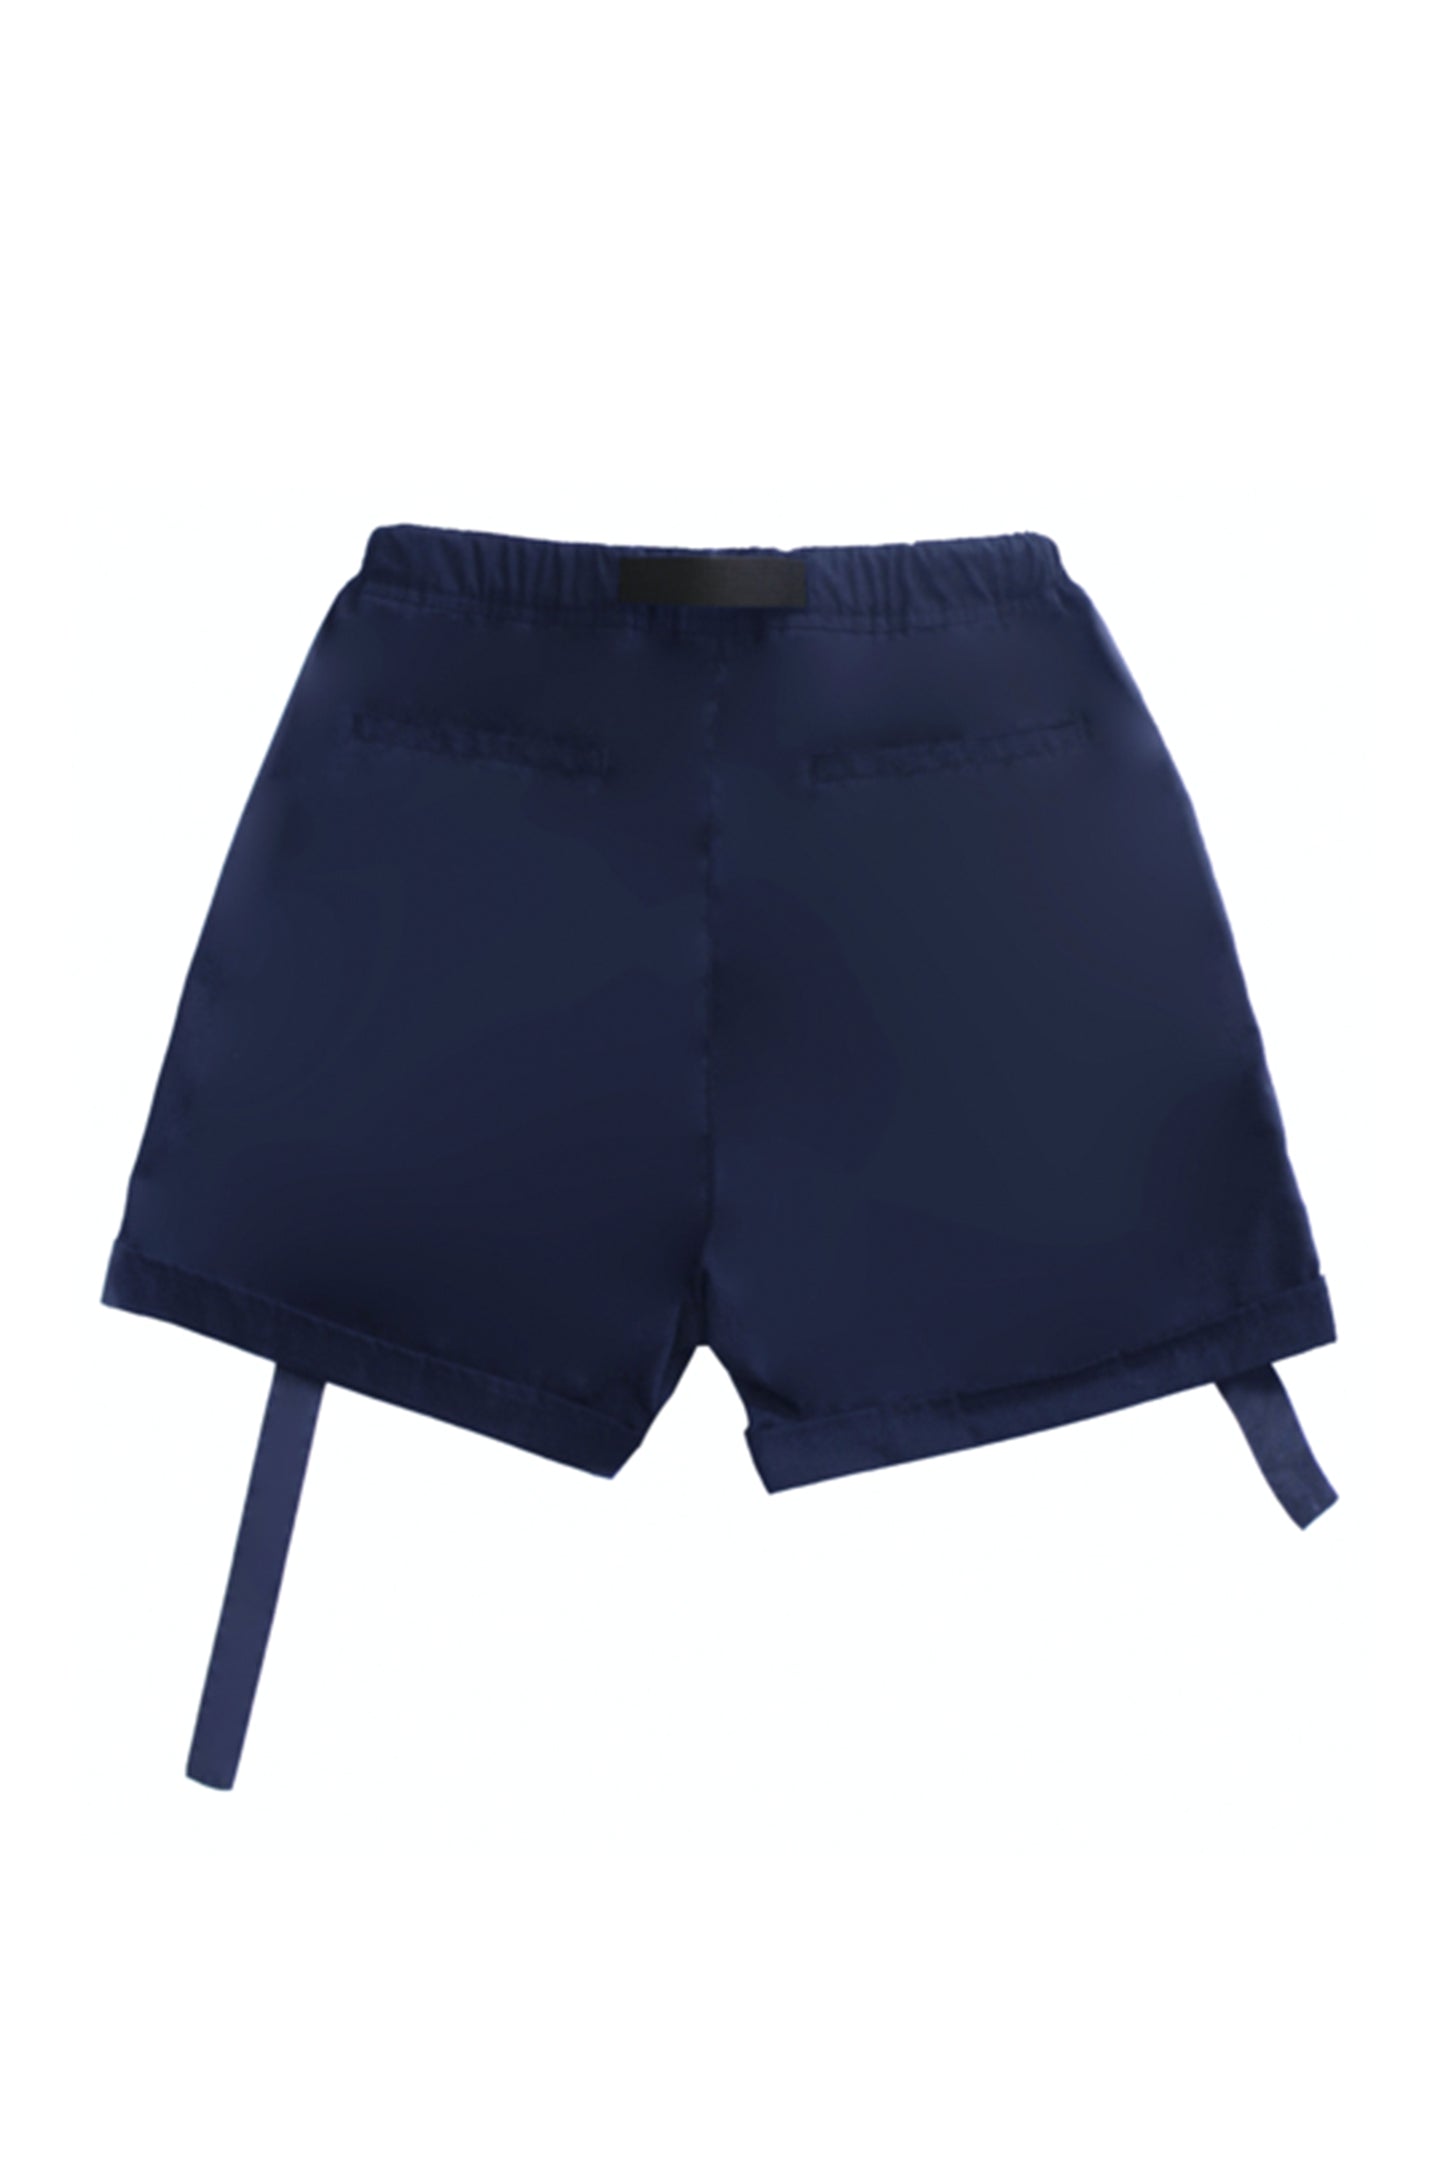 Naval Shorts